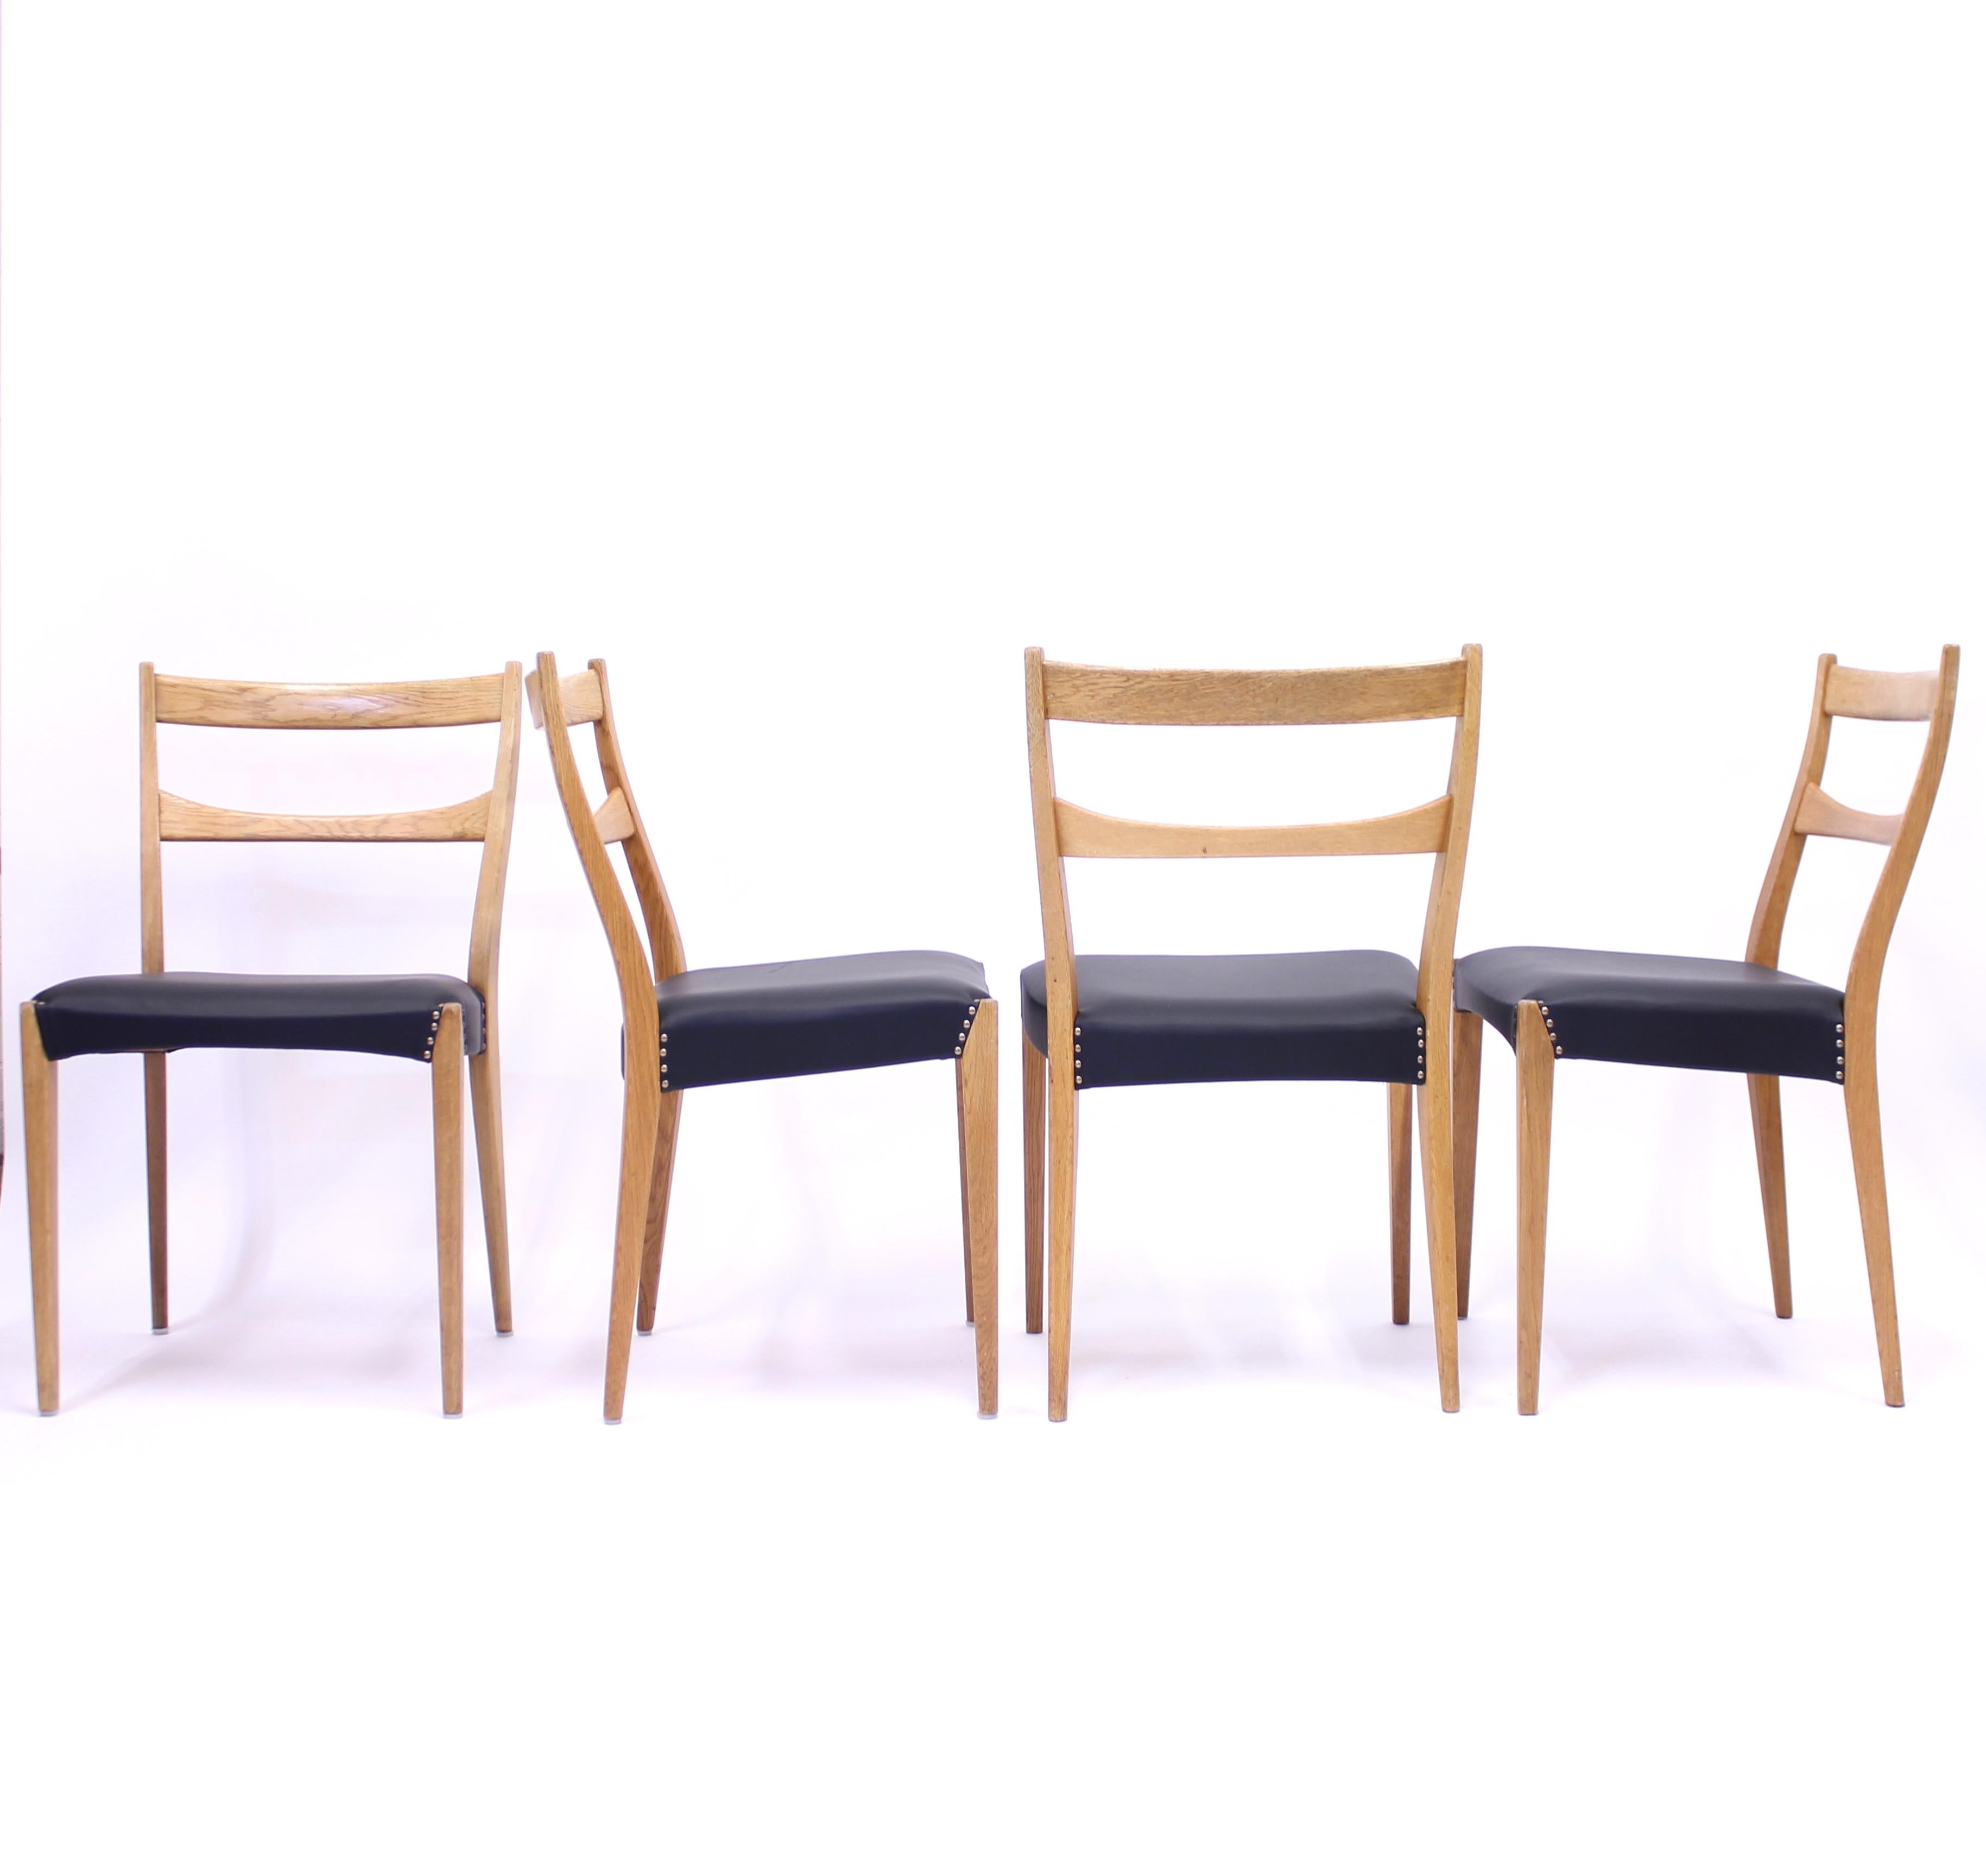 Scandinavian Modern Scandinavian Oak Dining Chairs with Black Leather Seats, 1950s For Sale